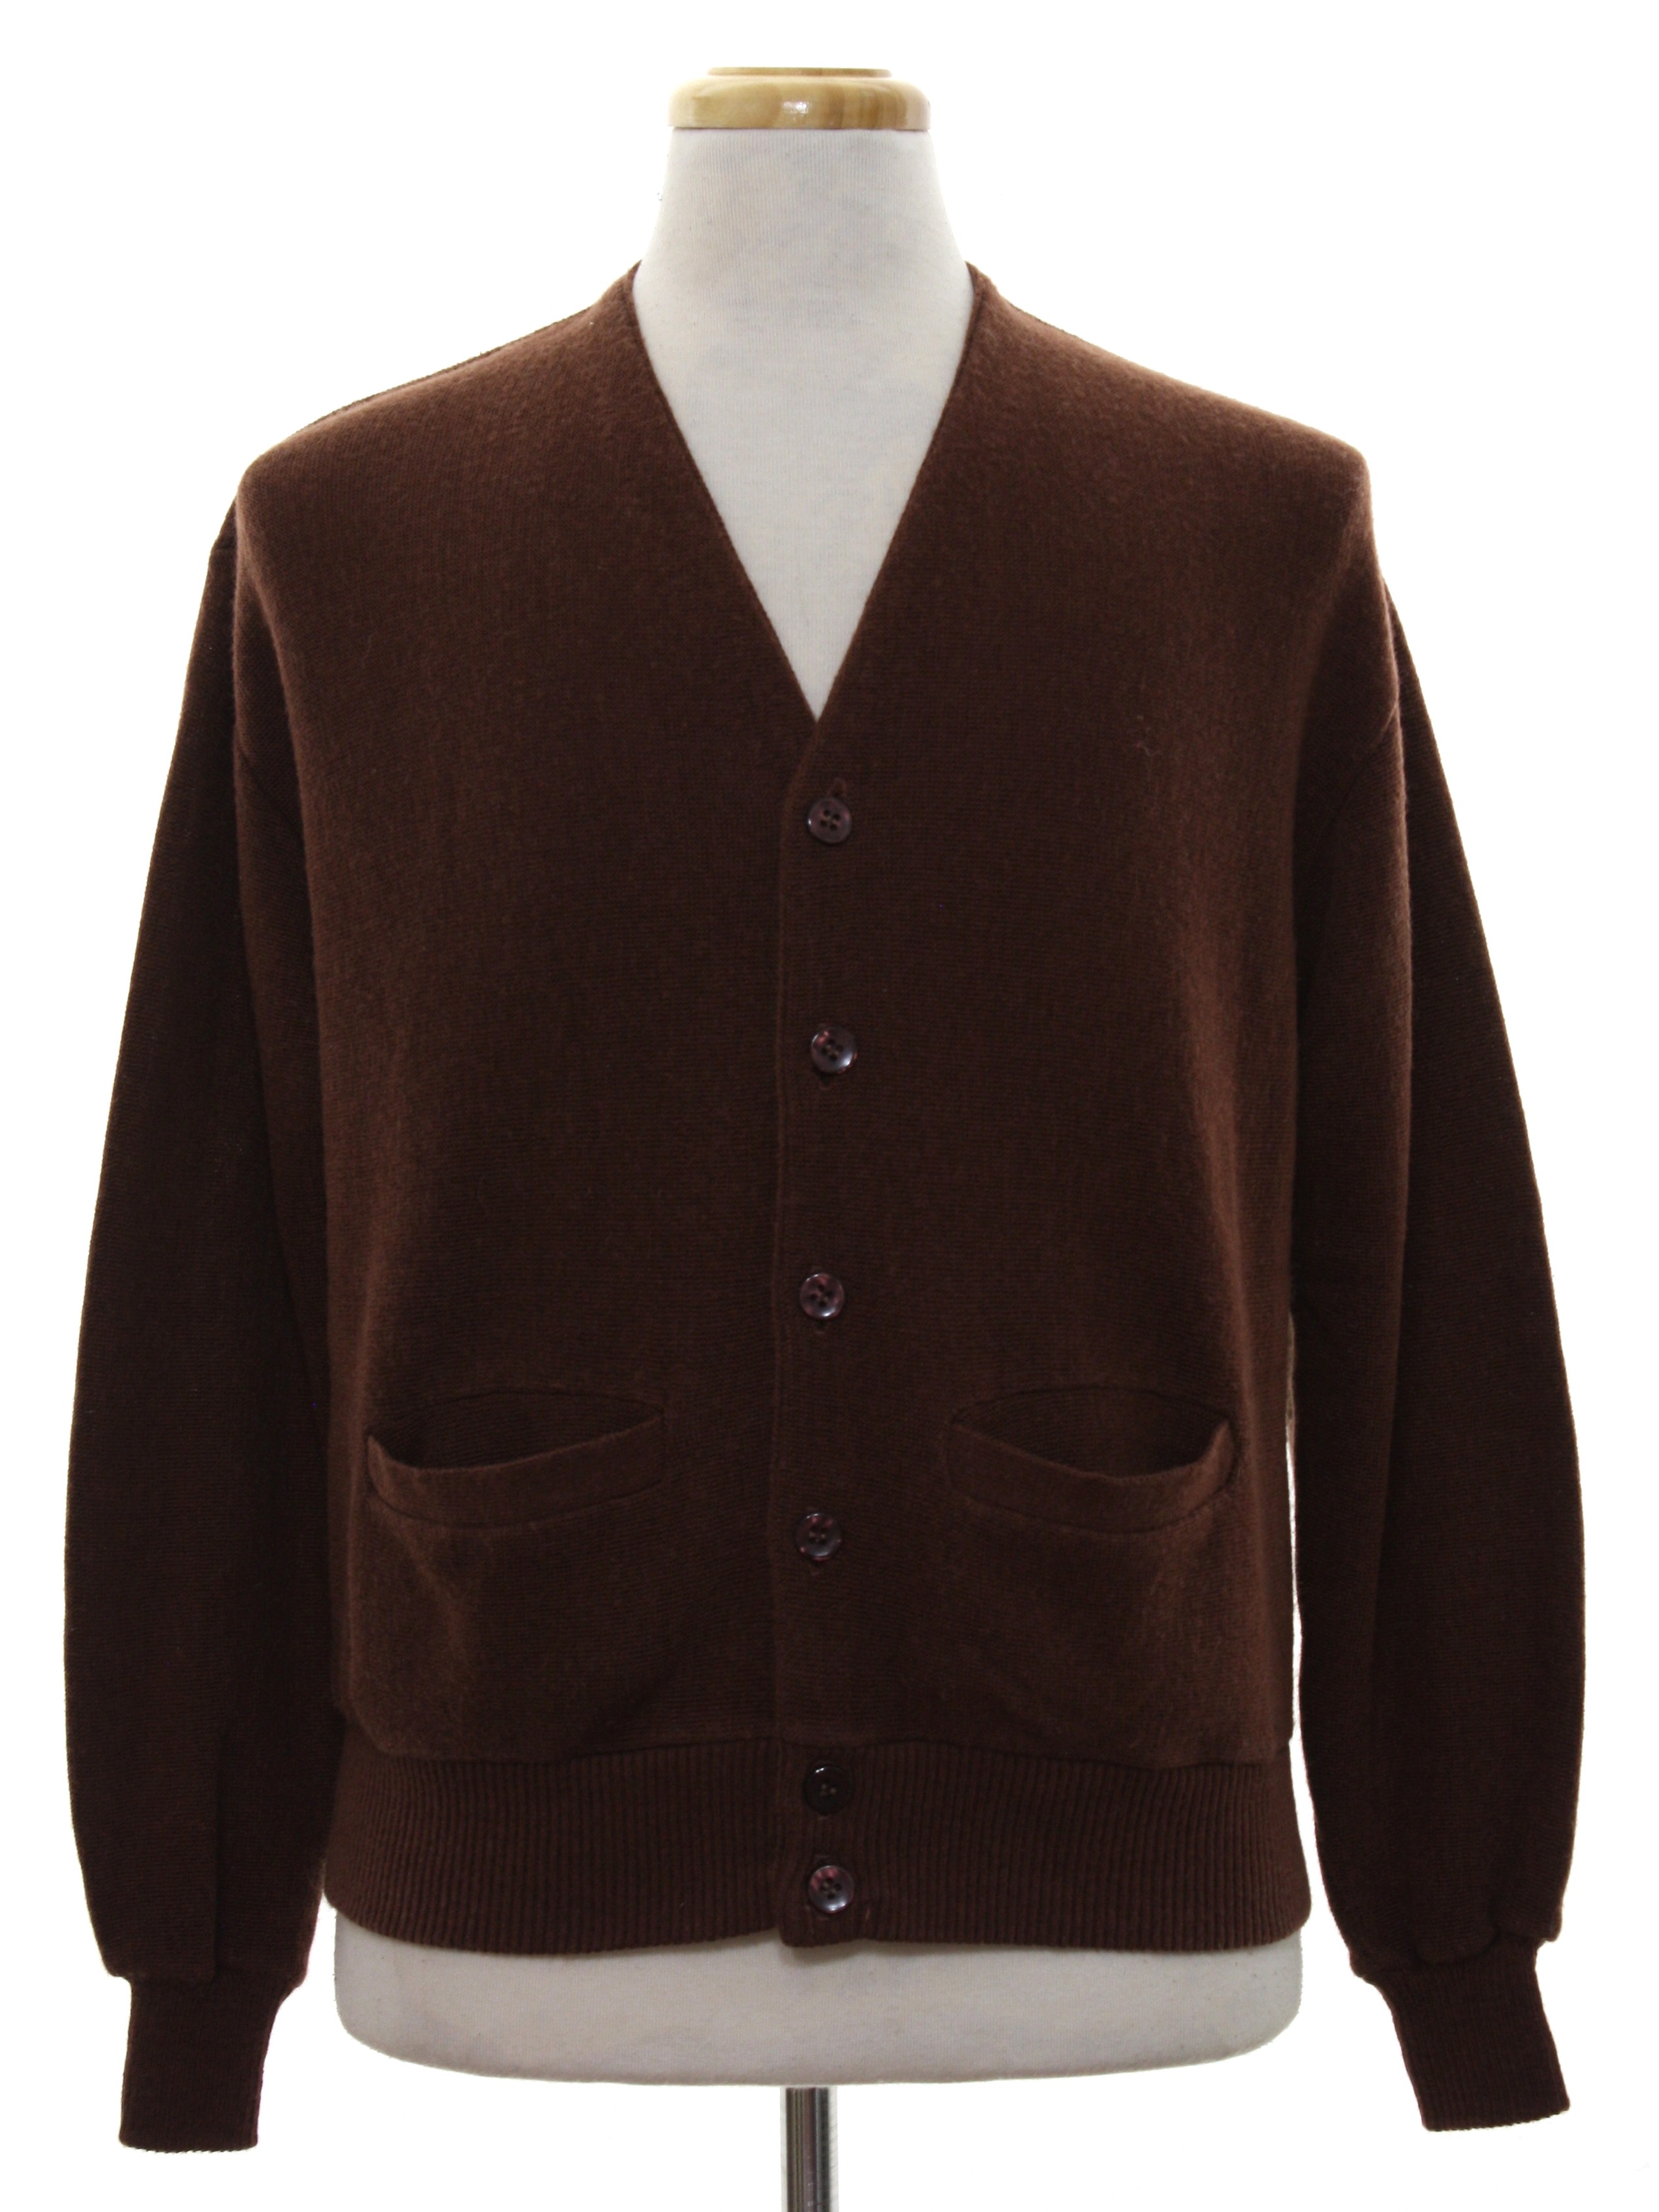 Buy > men's brown cardigan sweater > in stock